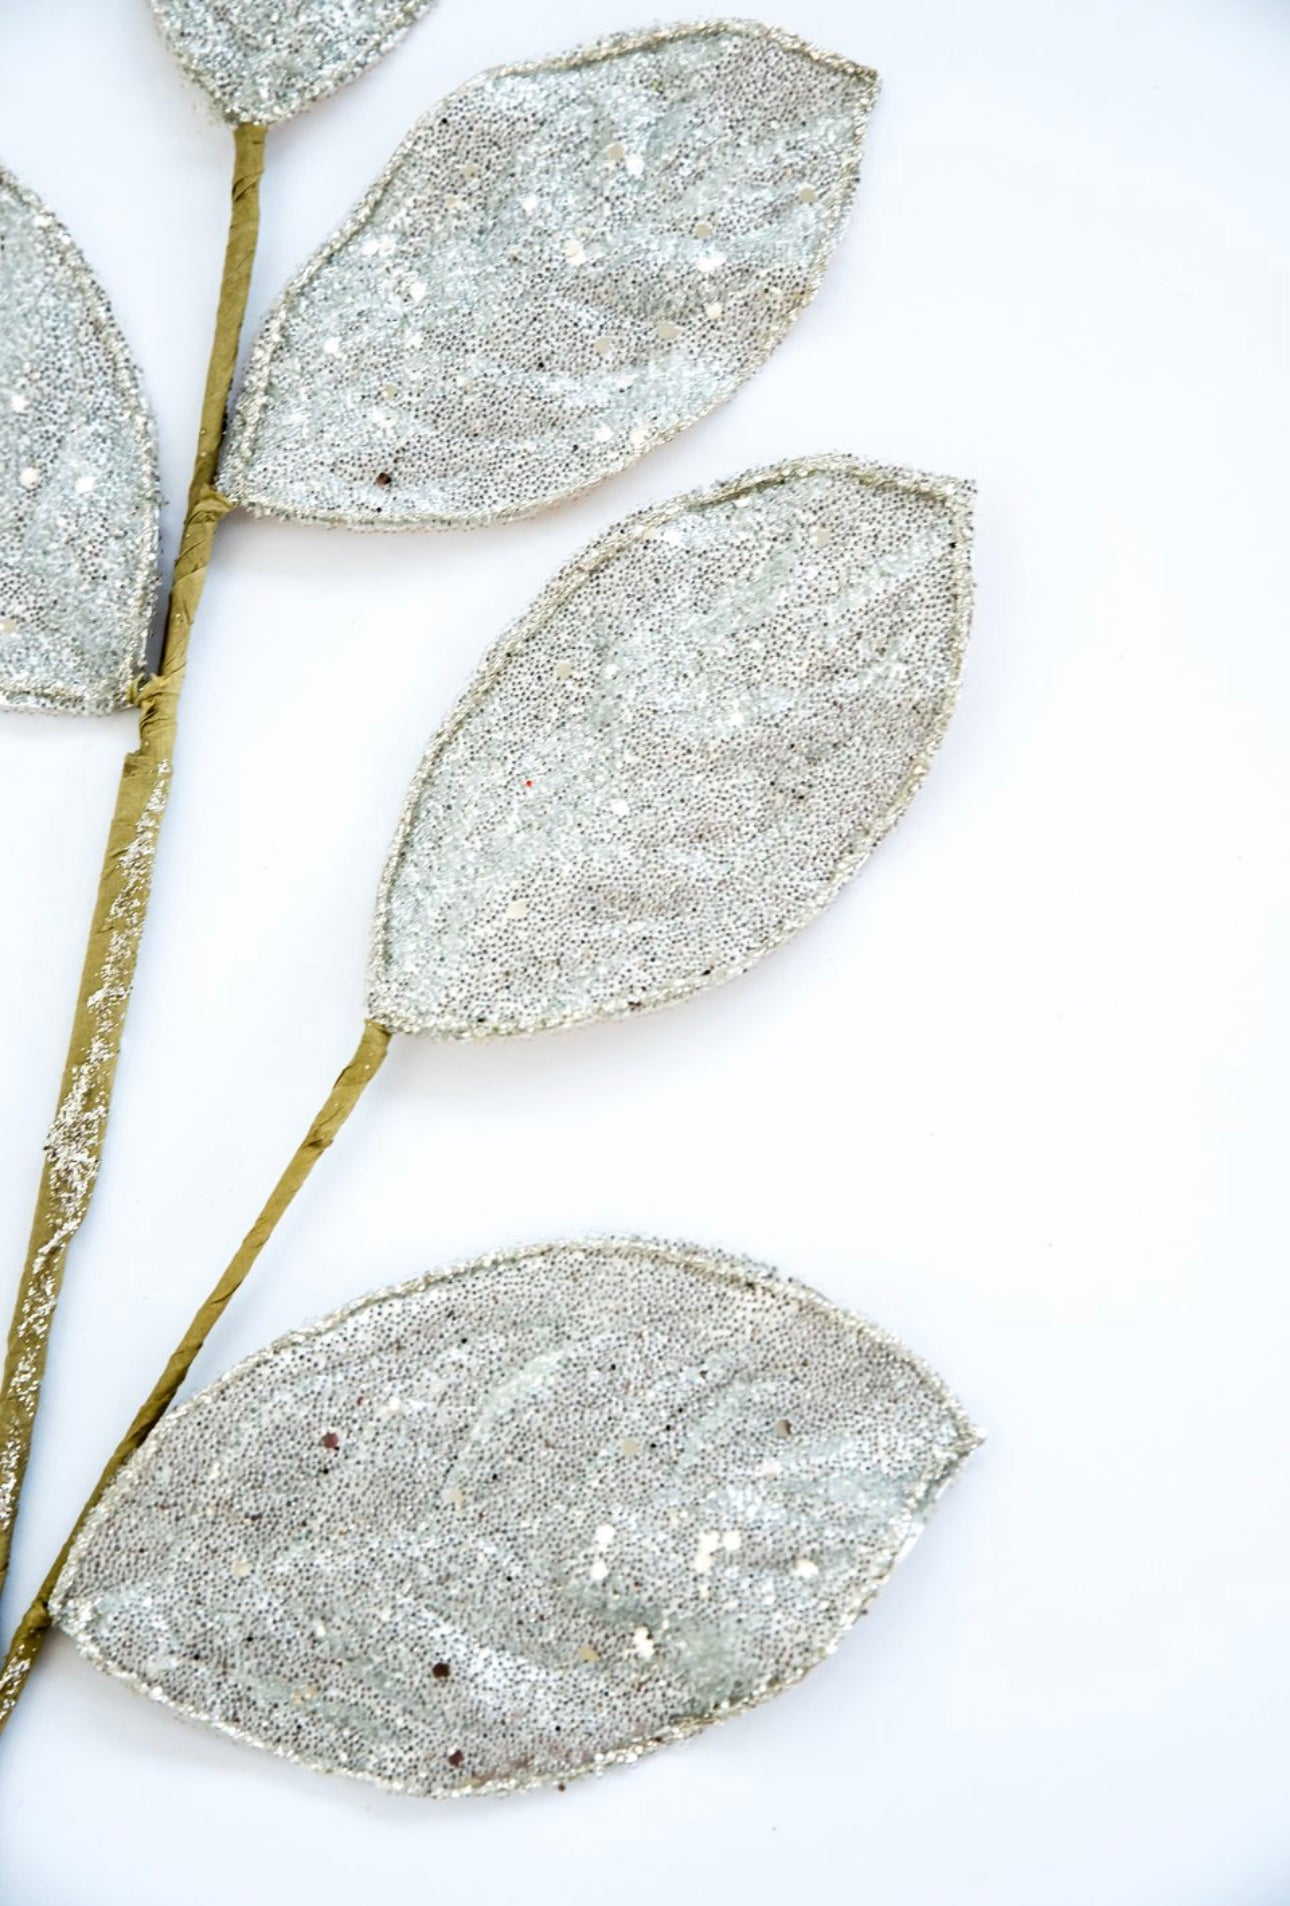 Platinum sequin and micro beaded magnolia leaves spray - Greenery MarketMTX68899 PLAT